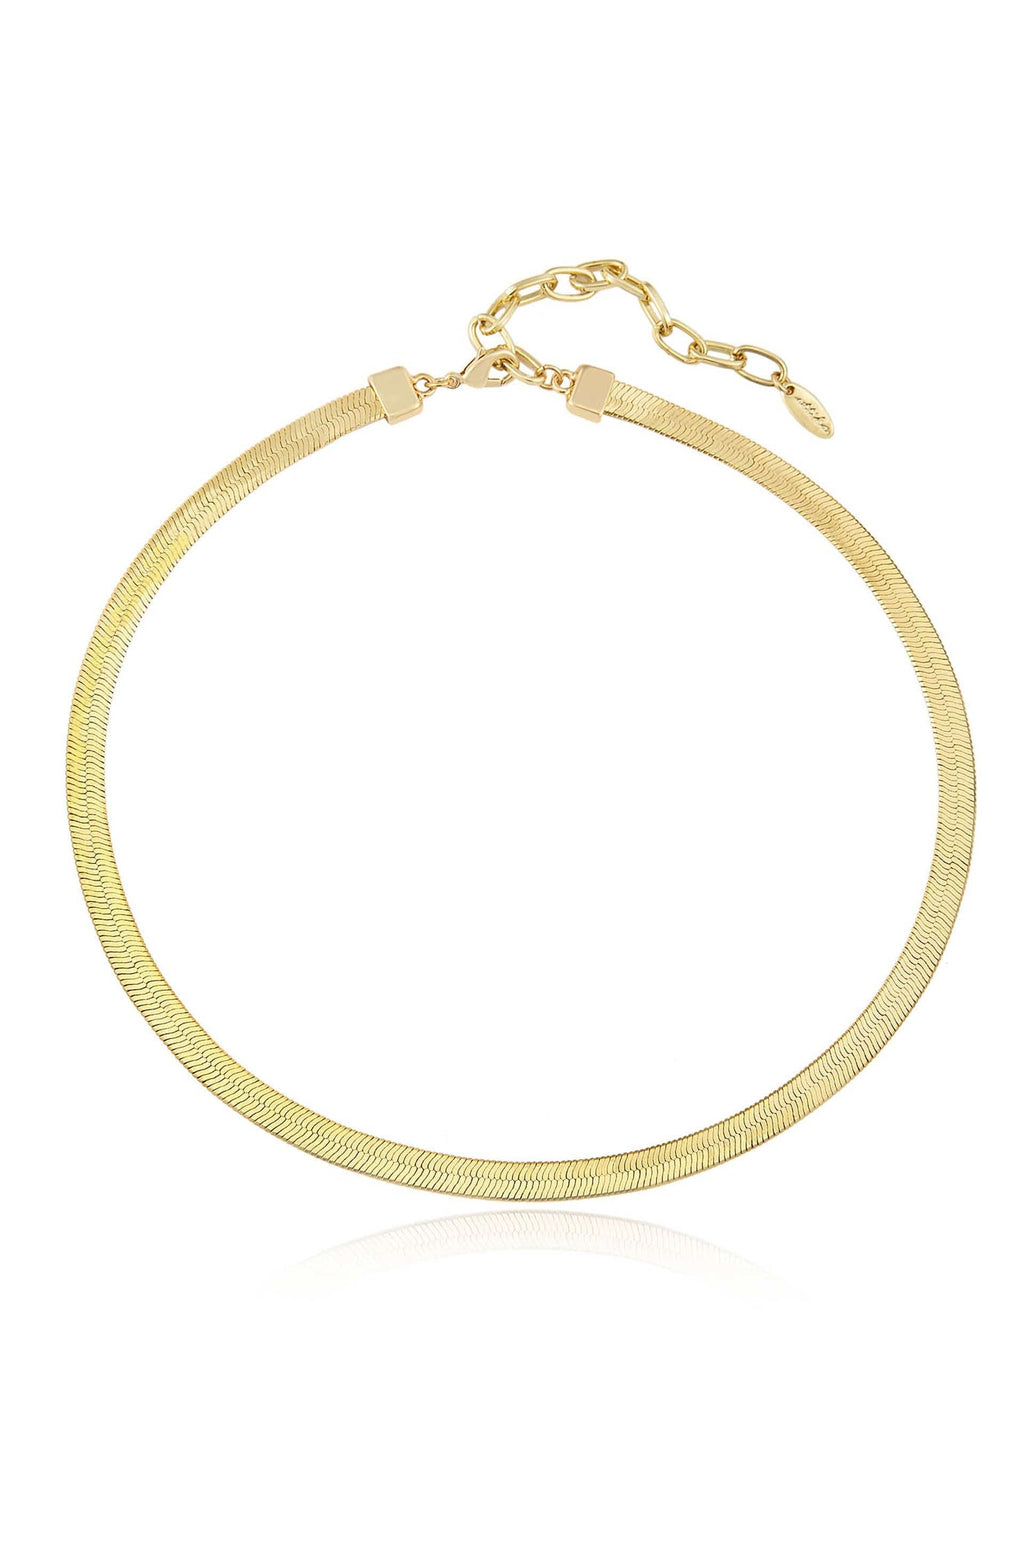 Ettika Necklaces 18k Gold Plated / One Size Brooklyn Flat Herringbone Chain Necklace